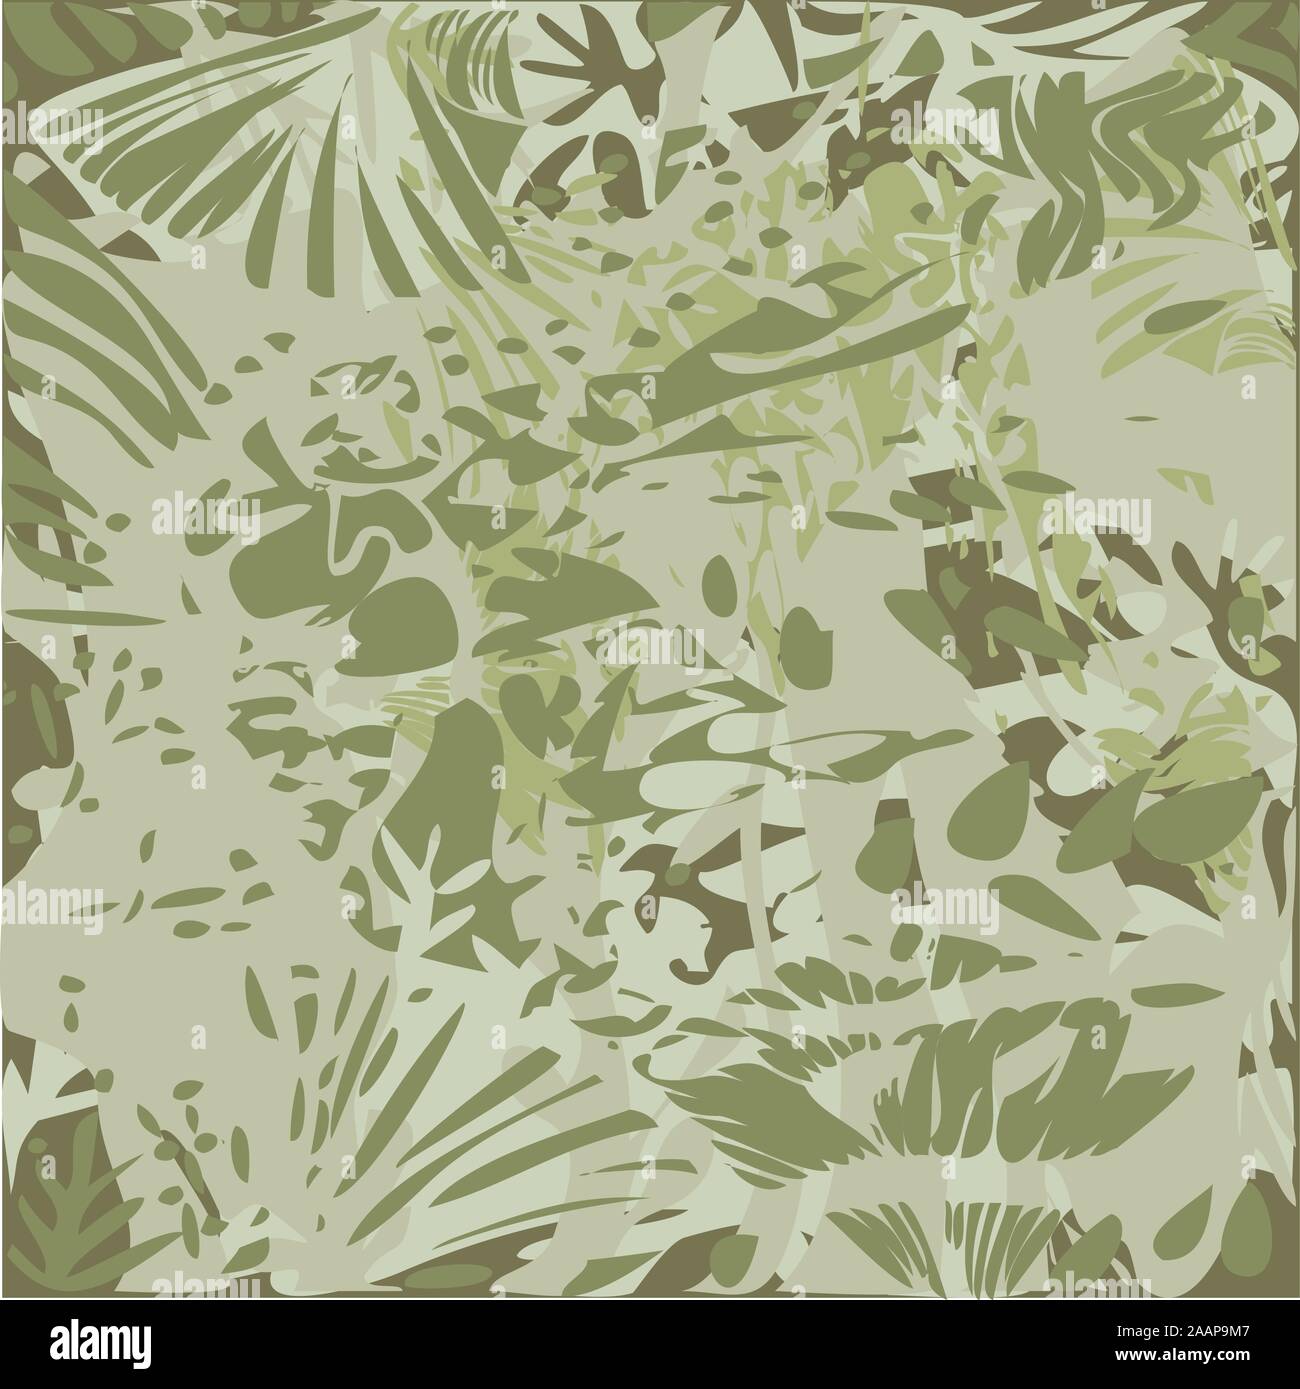 Vector Illustration der Abstrakten Laub Muster textureffekte-grünen Farben Stock Vektor